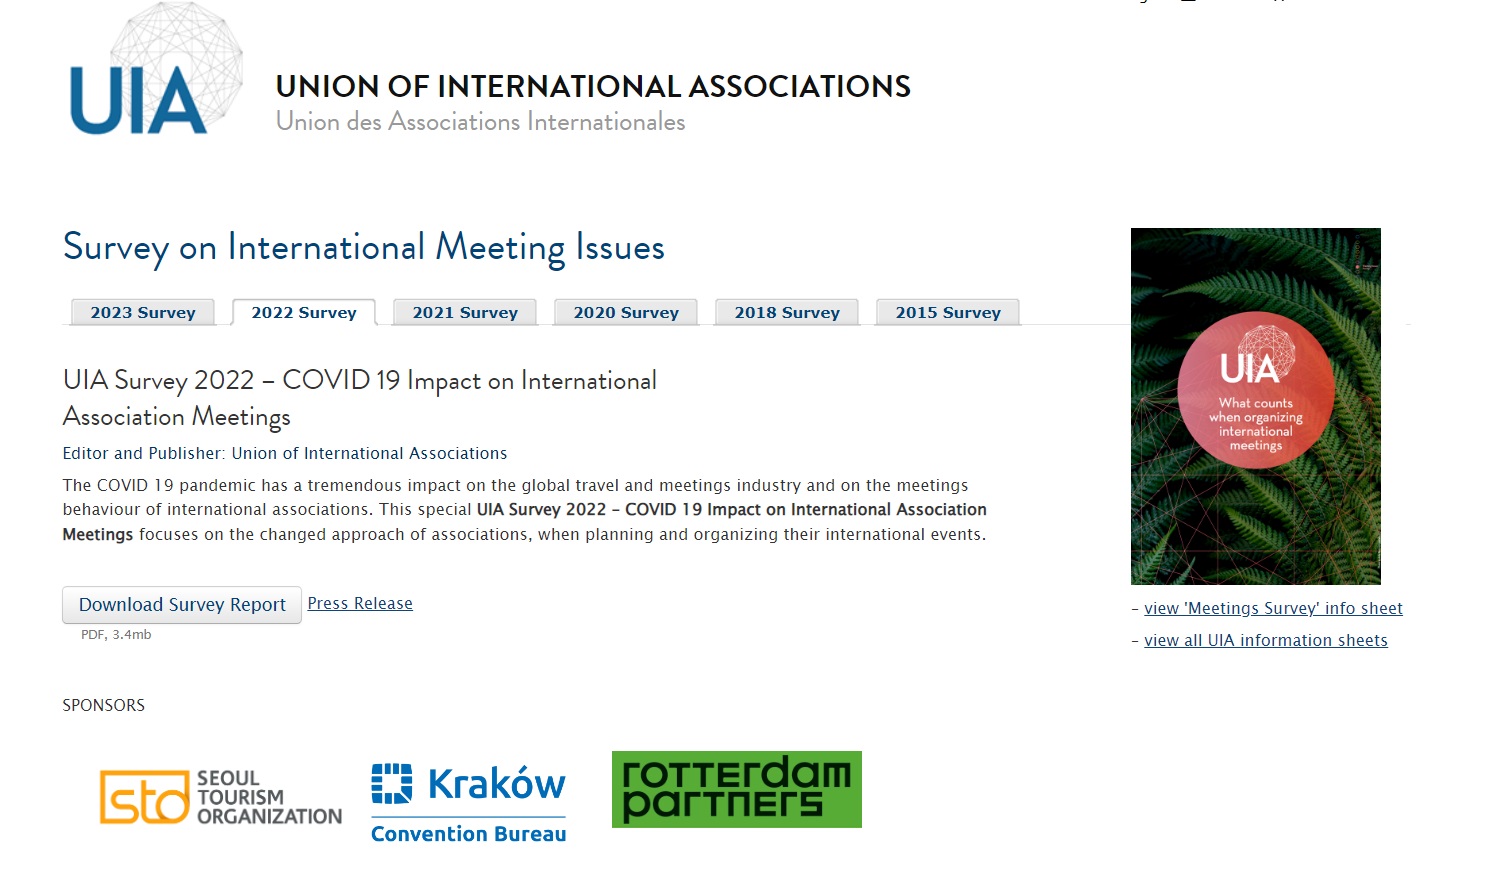 uia-survey-union-of-international-associations-download-report.jpg